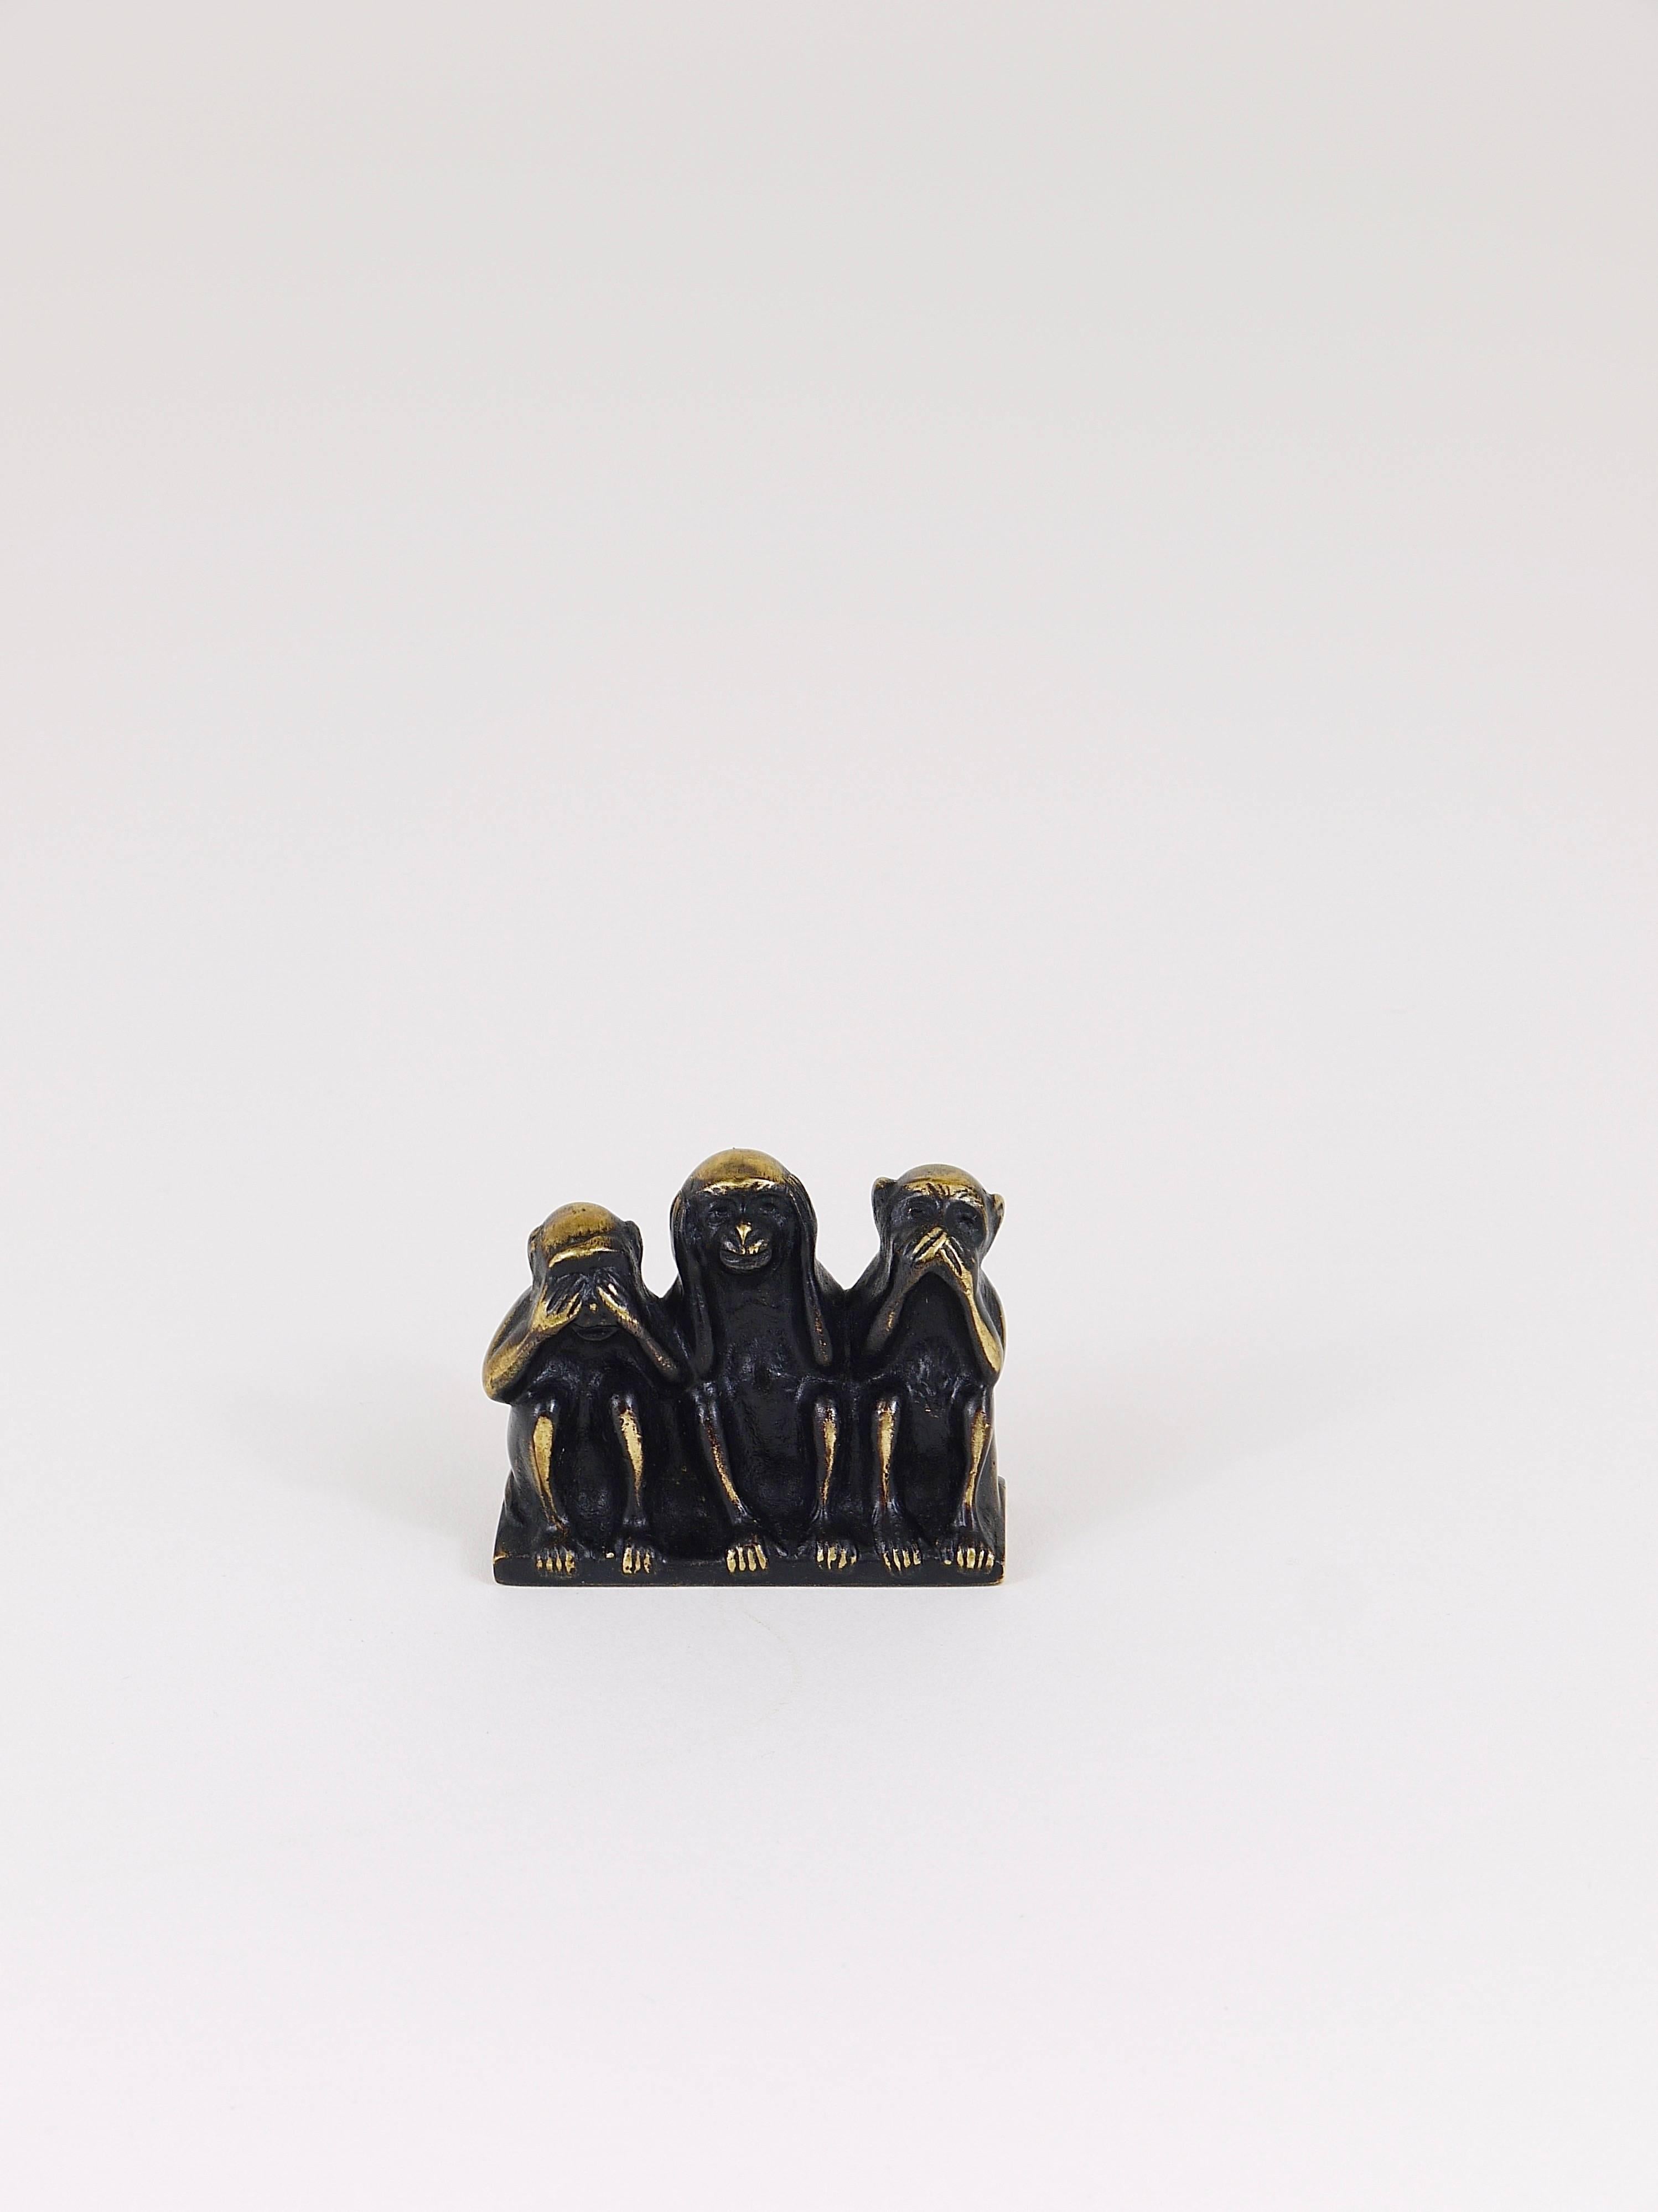 3 wise monkey figurines